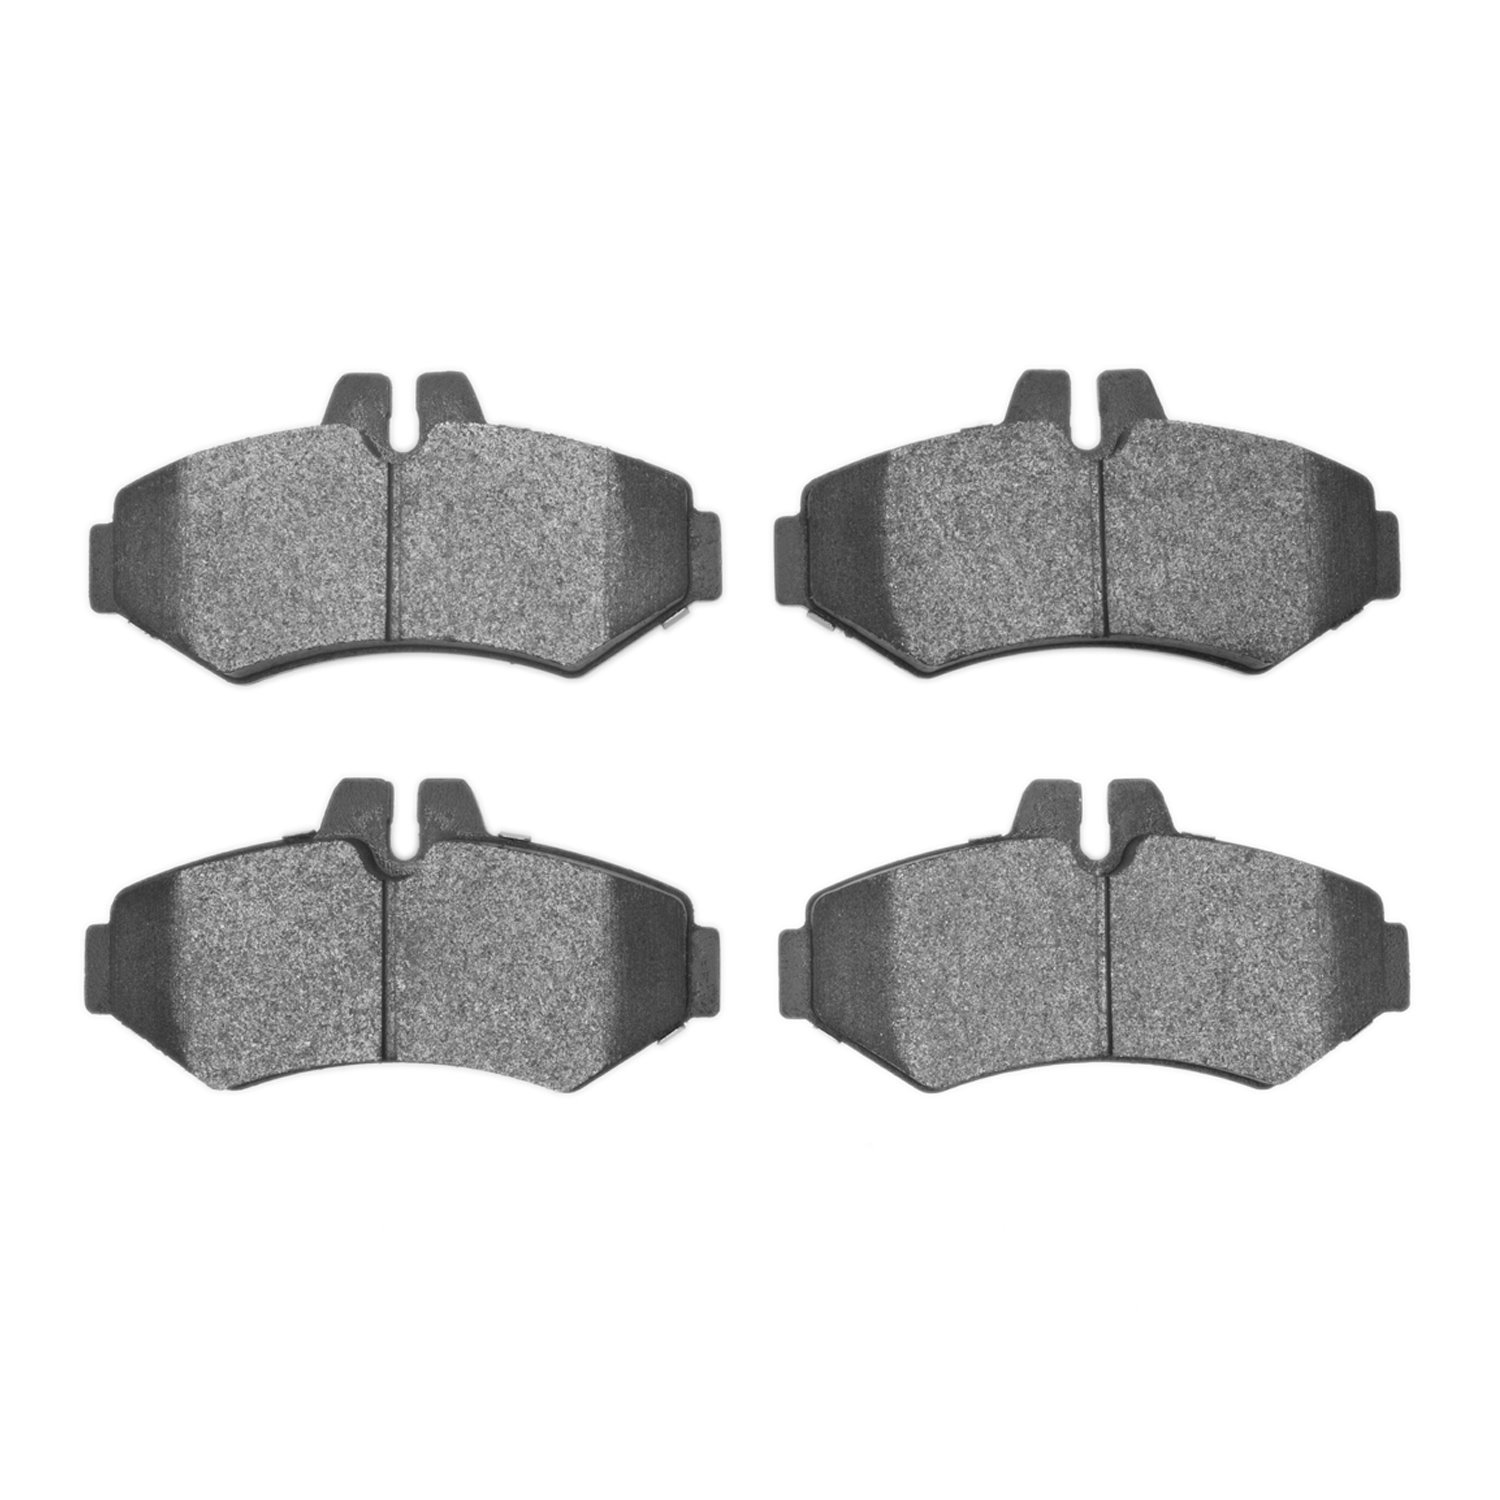 Semi-Metallic Brake Pads, 2002-2018 Fits Multiple Makes/Models, Position: Rear